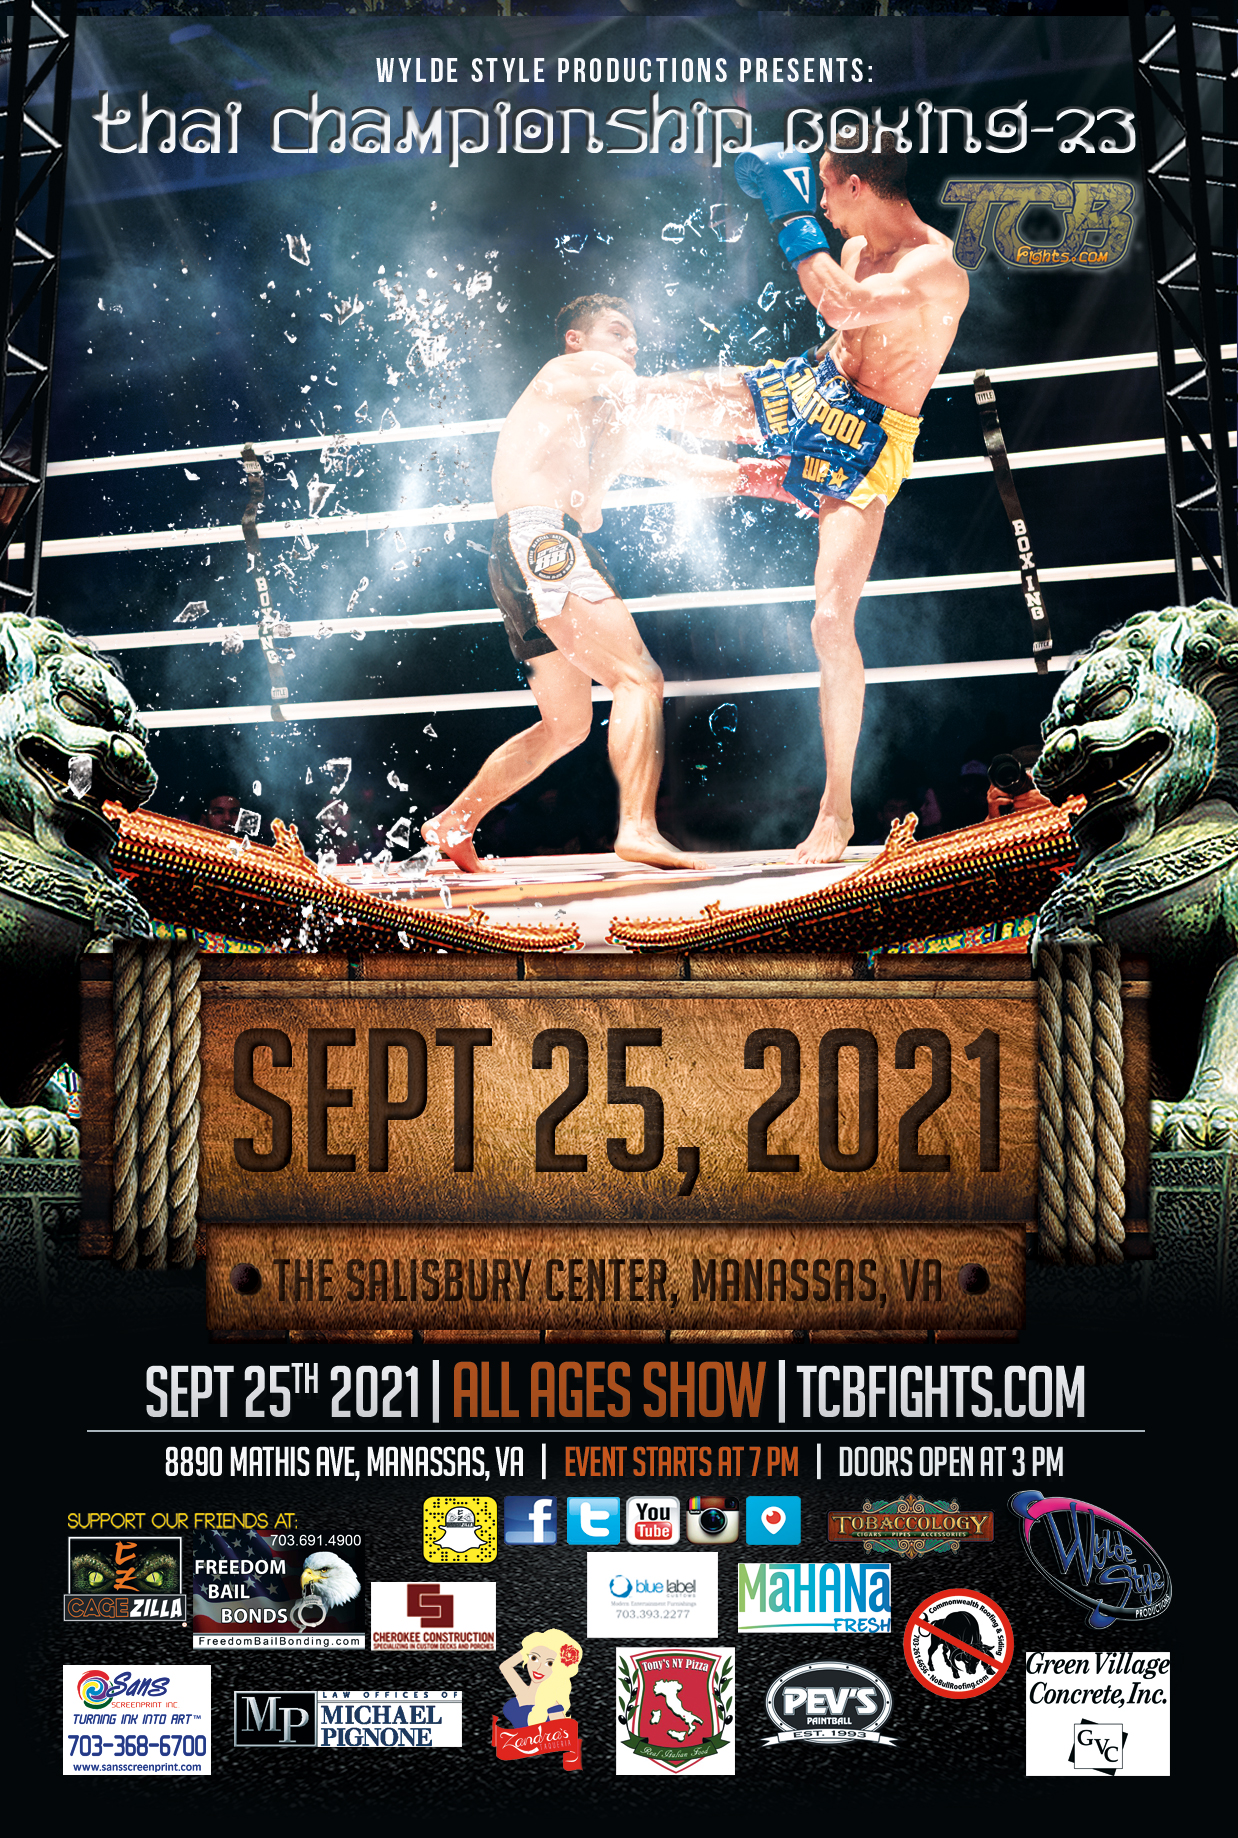 Thai Championship Boxing-23 – tcbfights.com